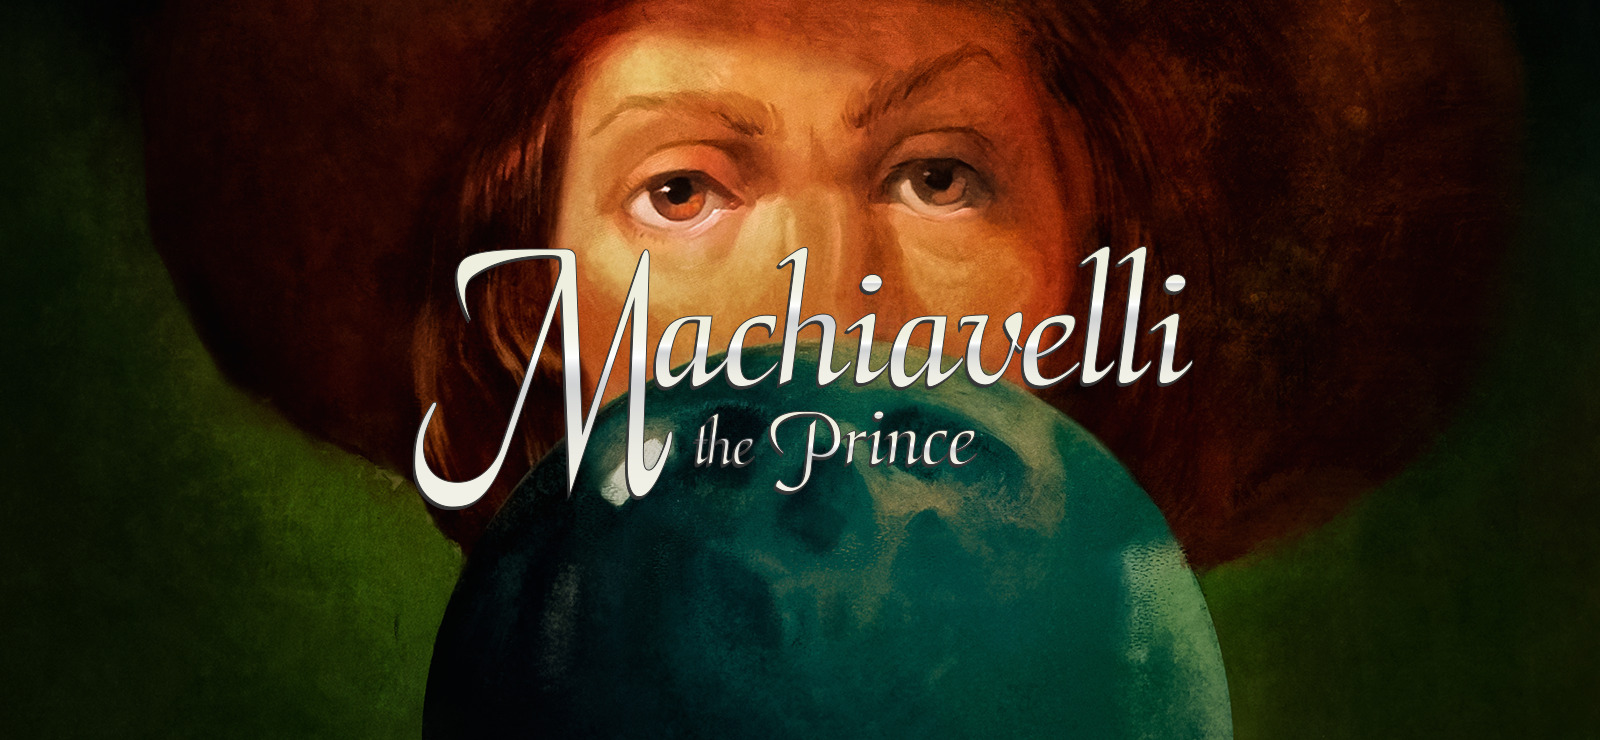 [閒聊] Machiavelli the Prince (gog 平史低)